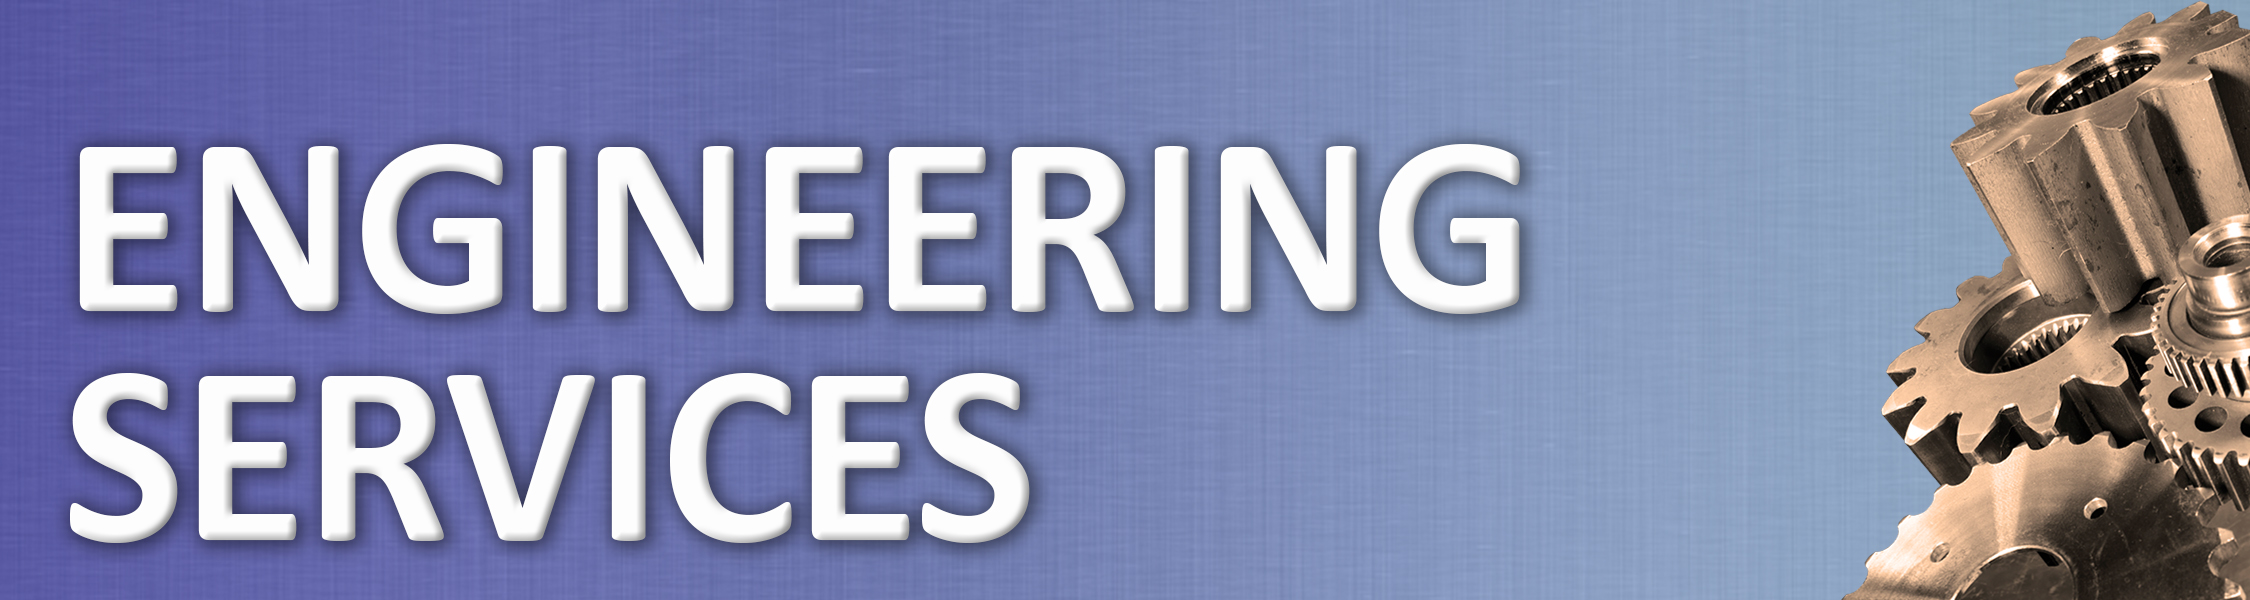 engineering services header